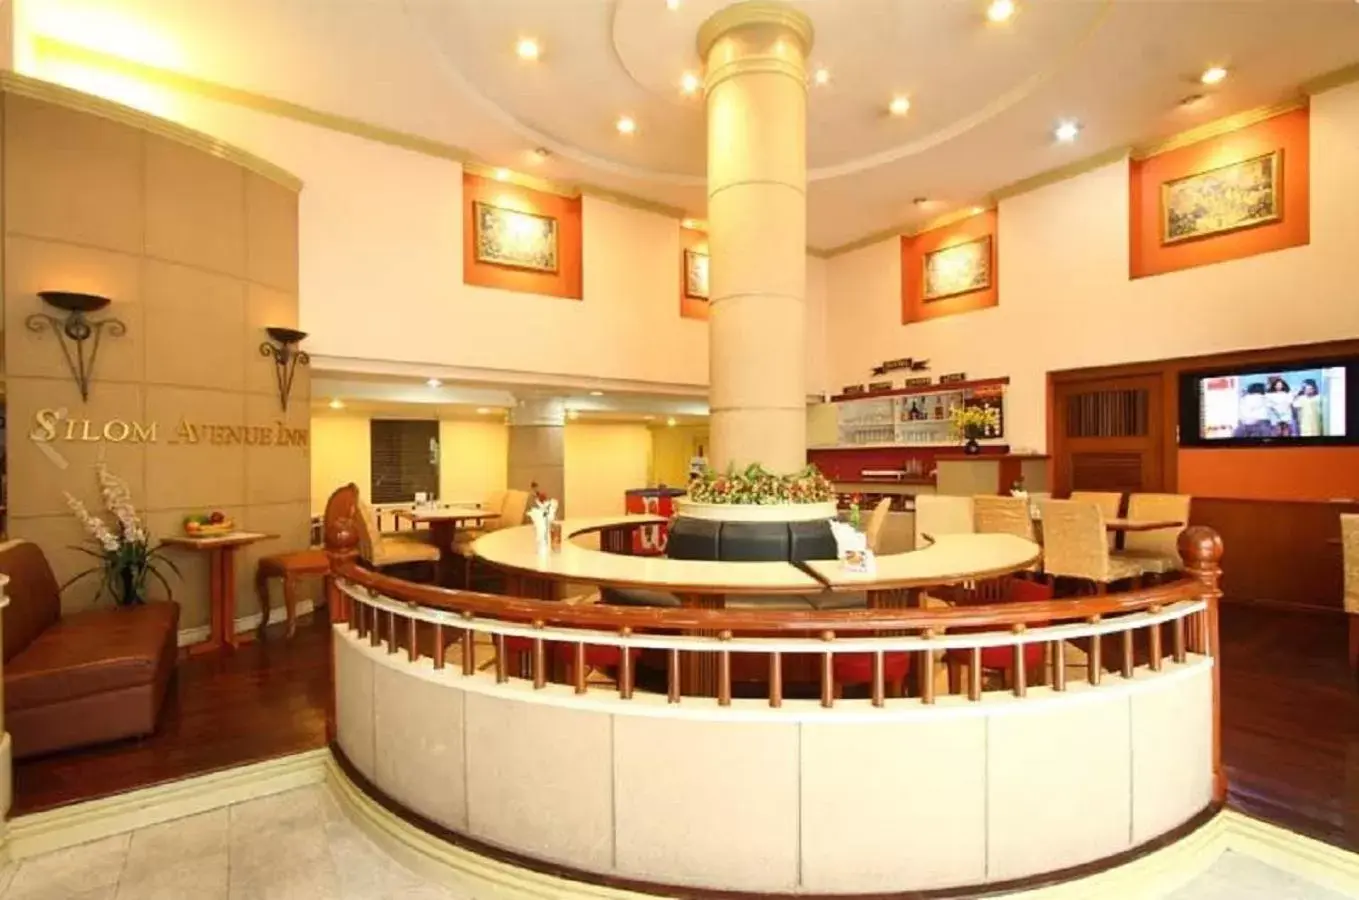 Restaurant/places to eat, Lobby/Reception in Silom Avenue Inn